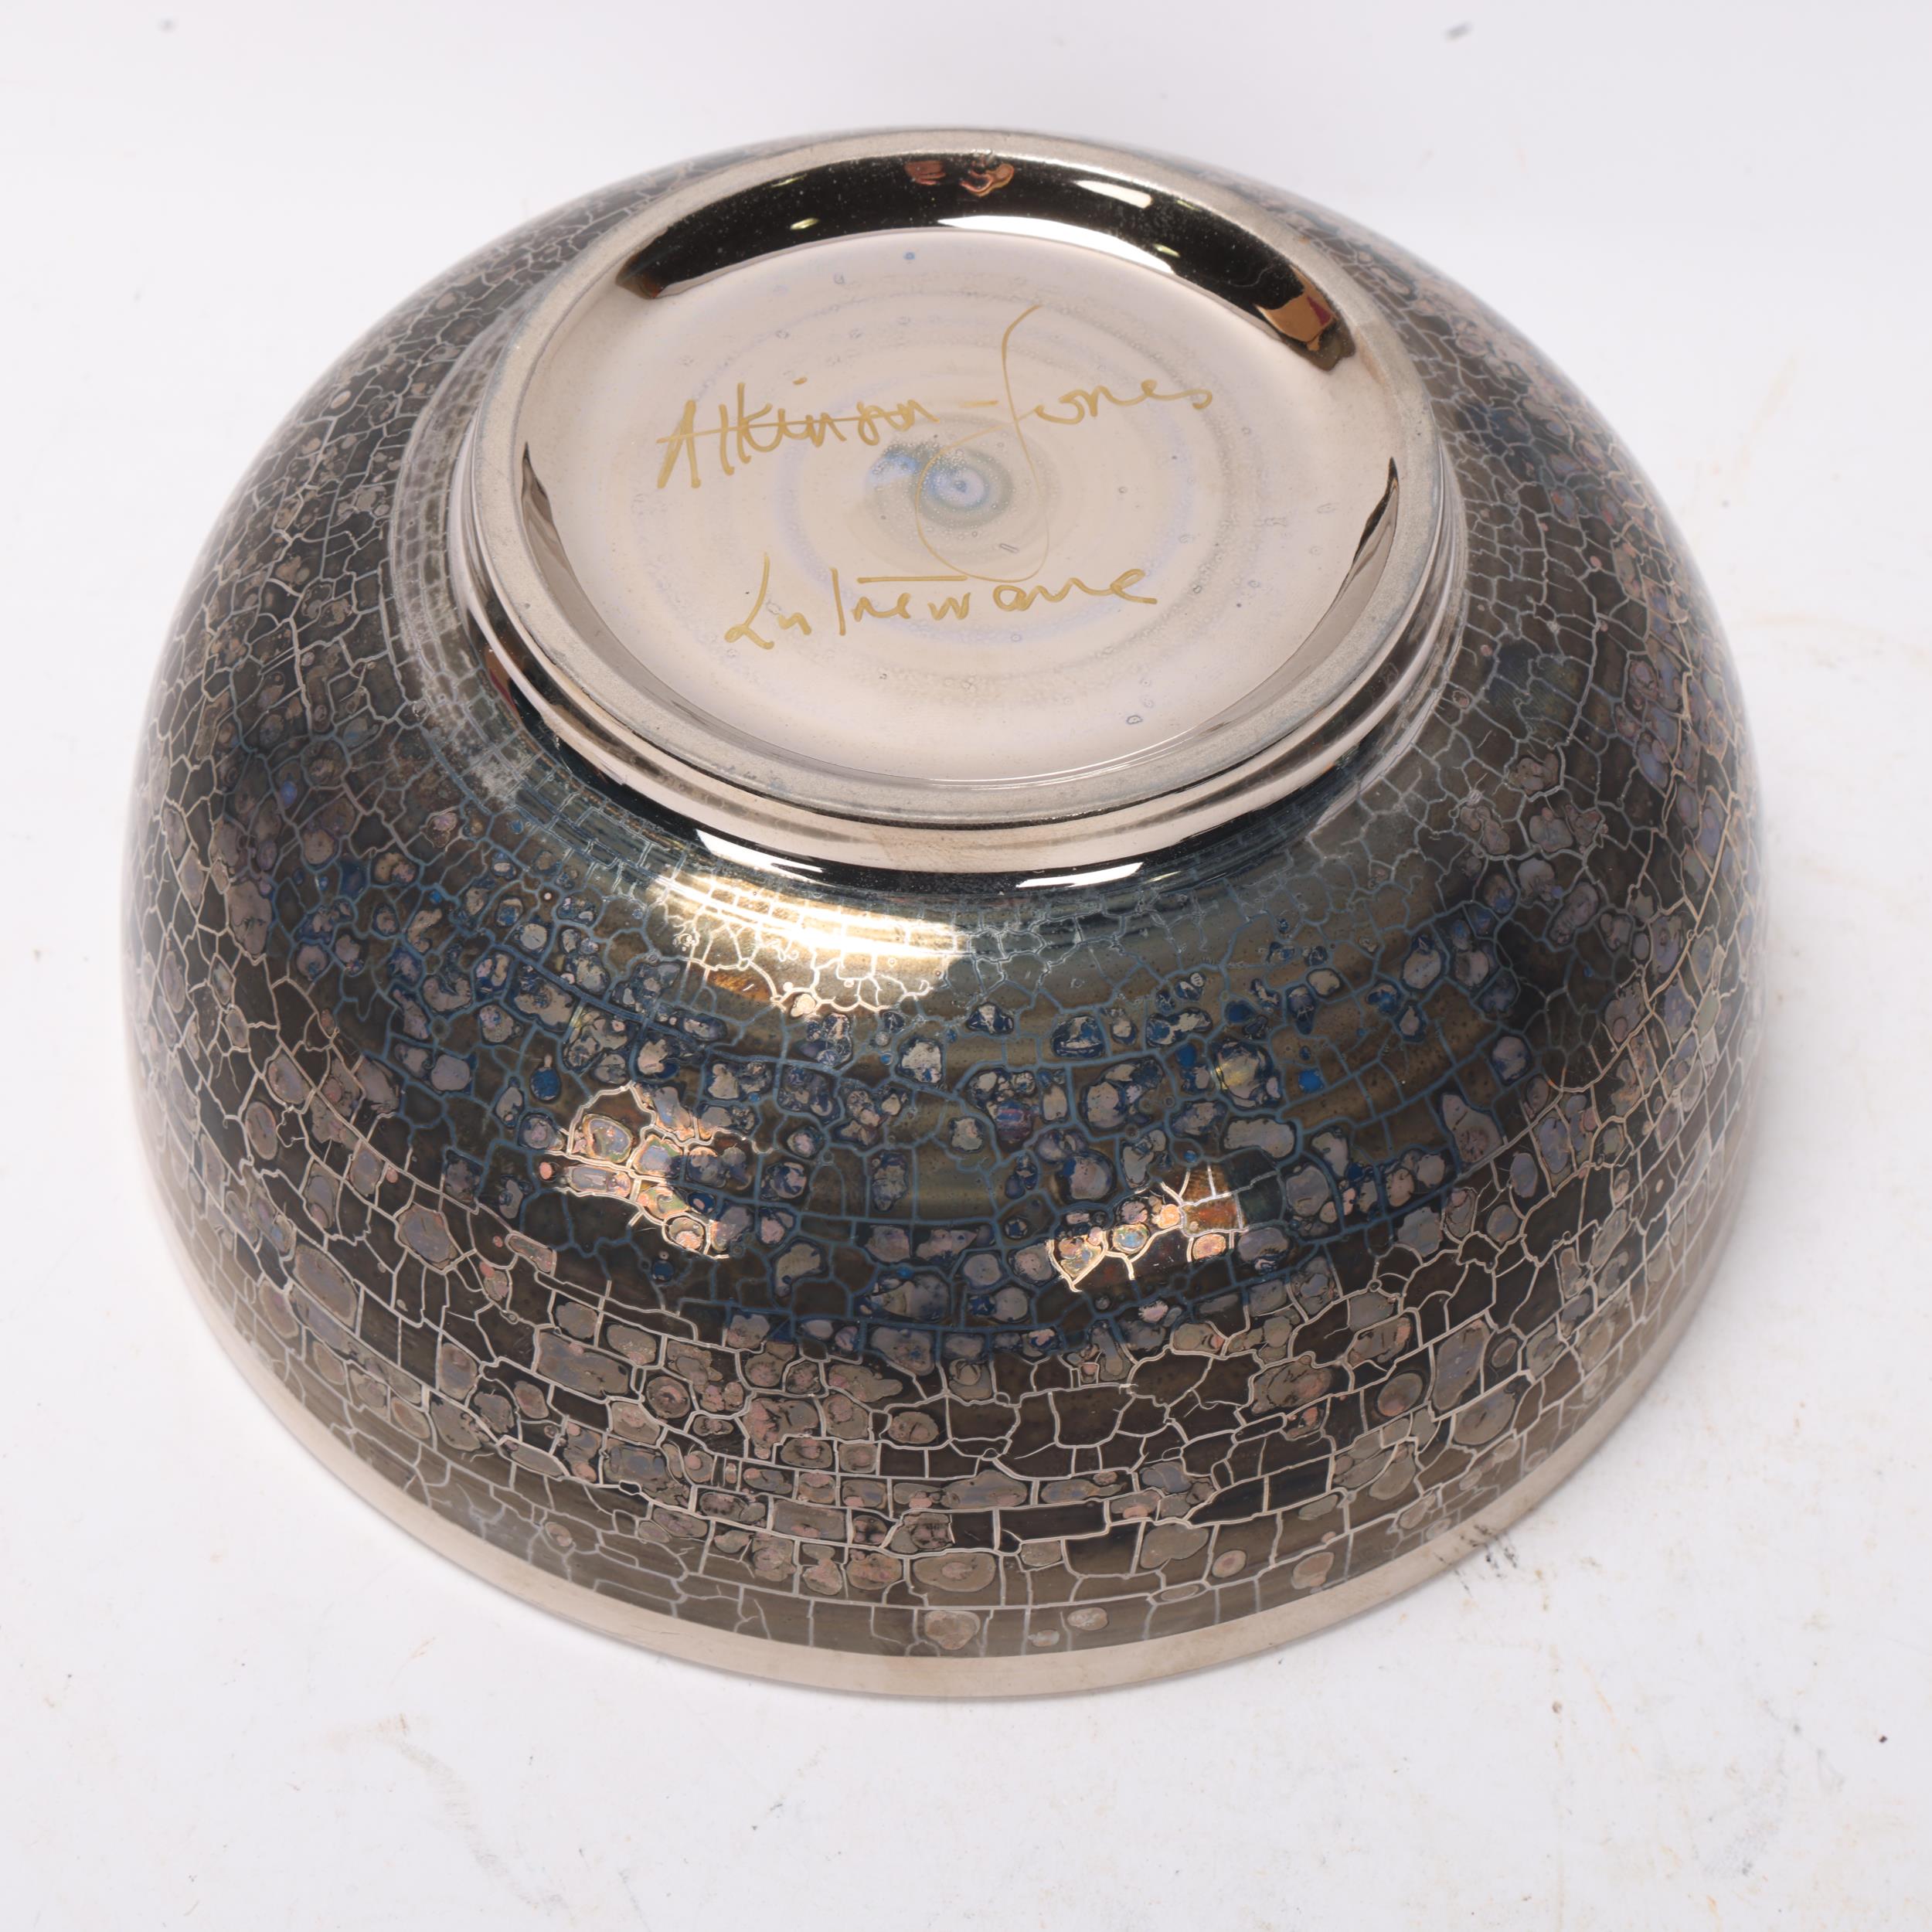 CAROLINE & STEPHEN ATKINSON-JONES, a slip-cast fruit bowl, with silver lustre glaze, signed to base, - Image 2 of 3